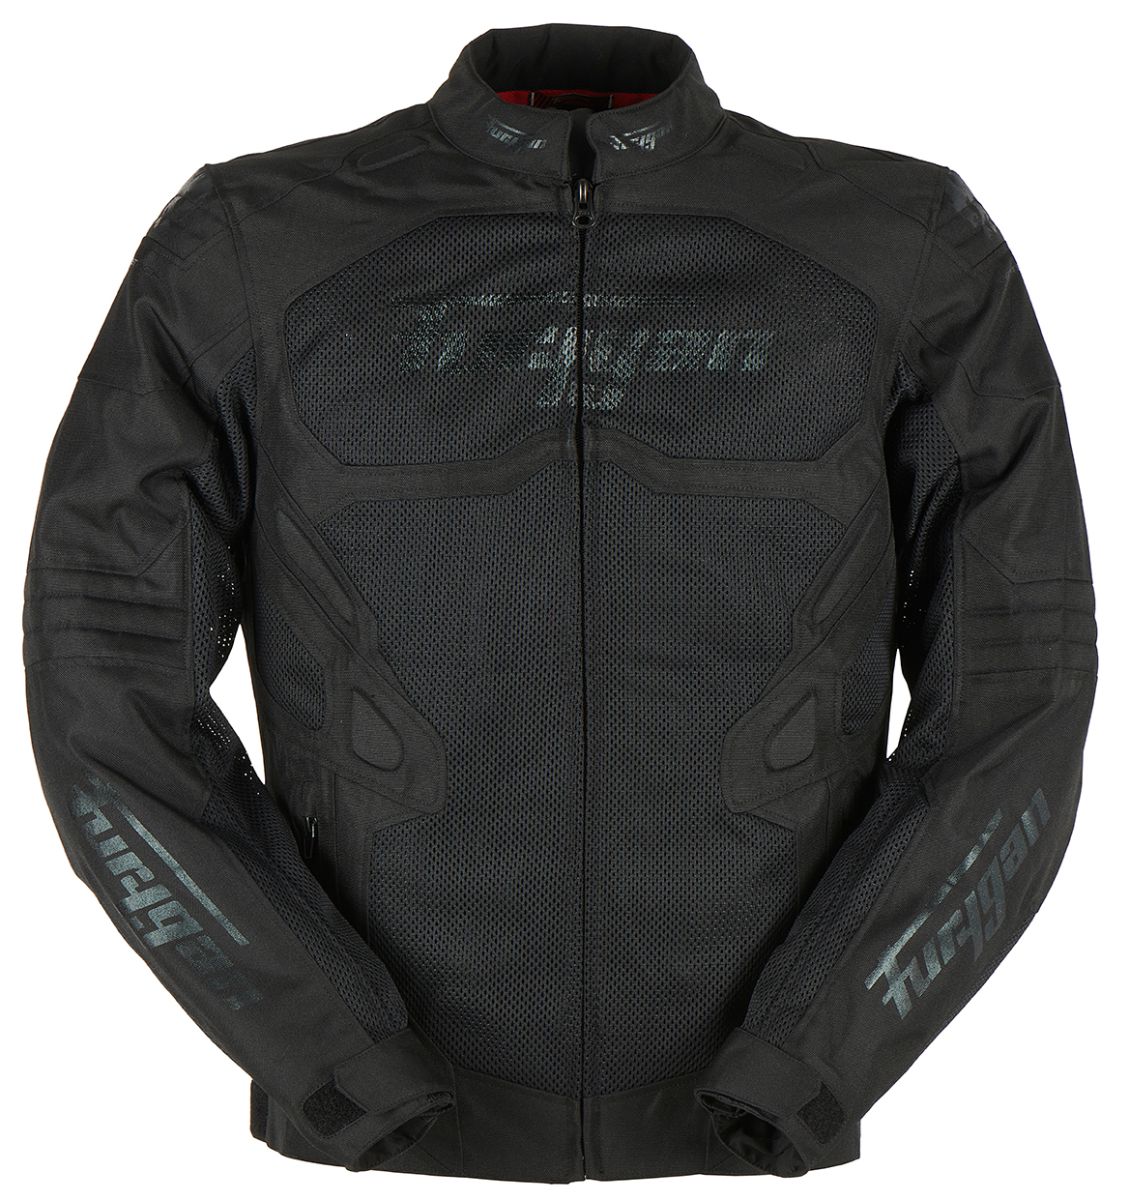 Image of Furygan Atom Vented Evo Jacket Black Size S ID 3435980347215